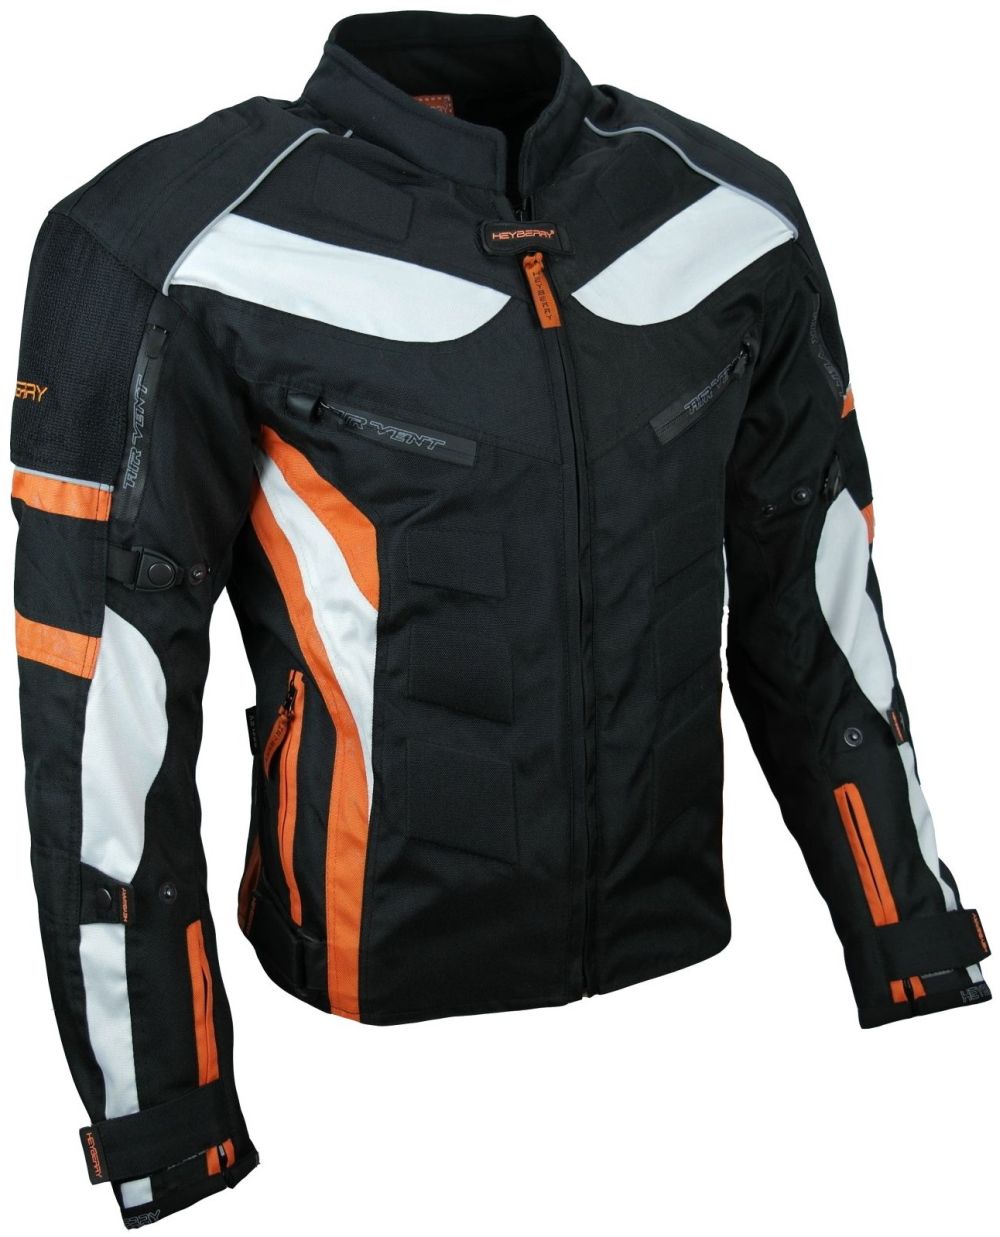 Heyberry Textil Motorrad Jacke Motorradjacke Schwarz Orange Gr XL